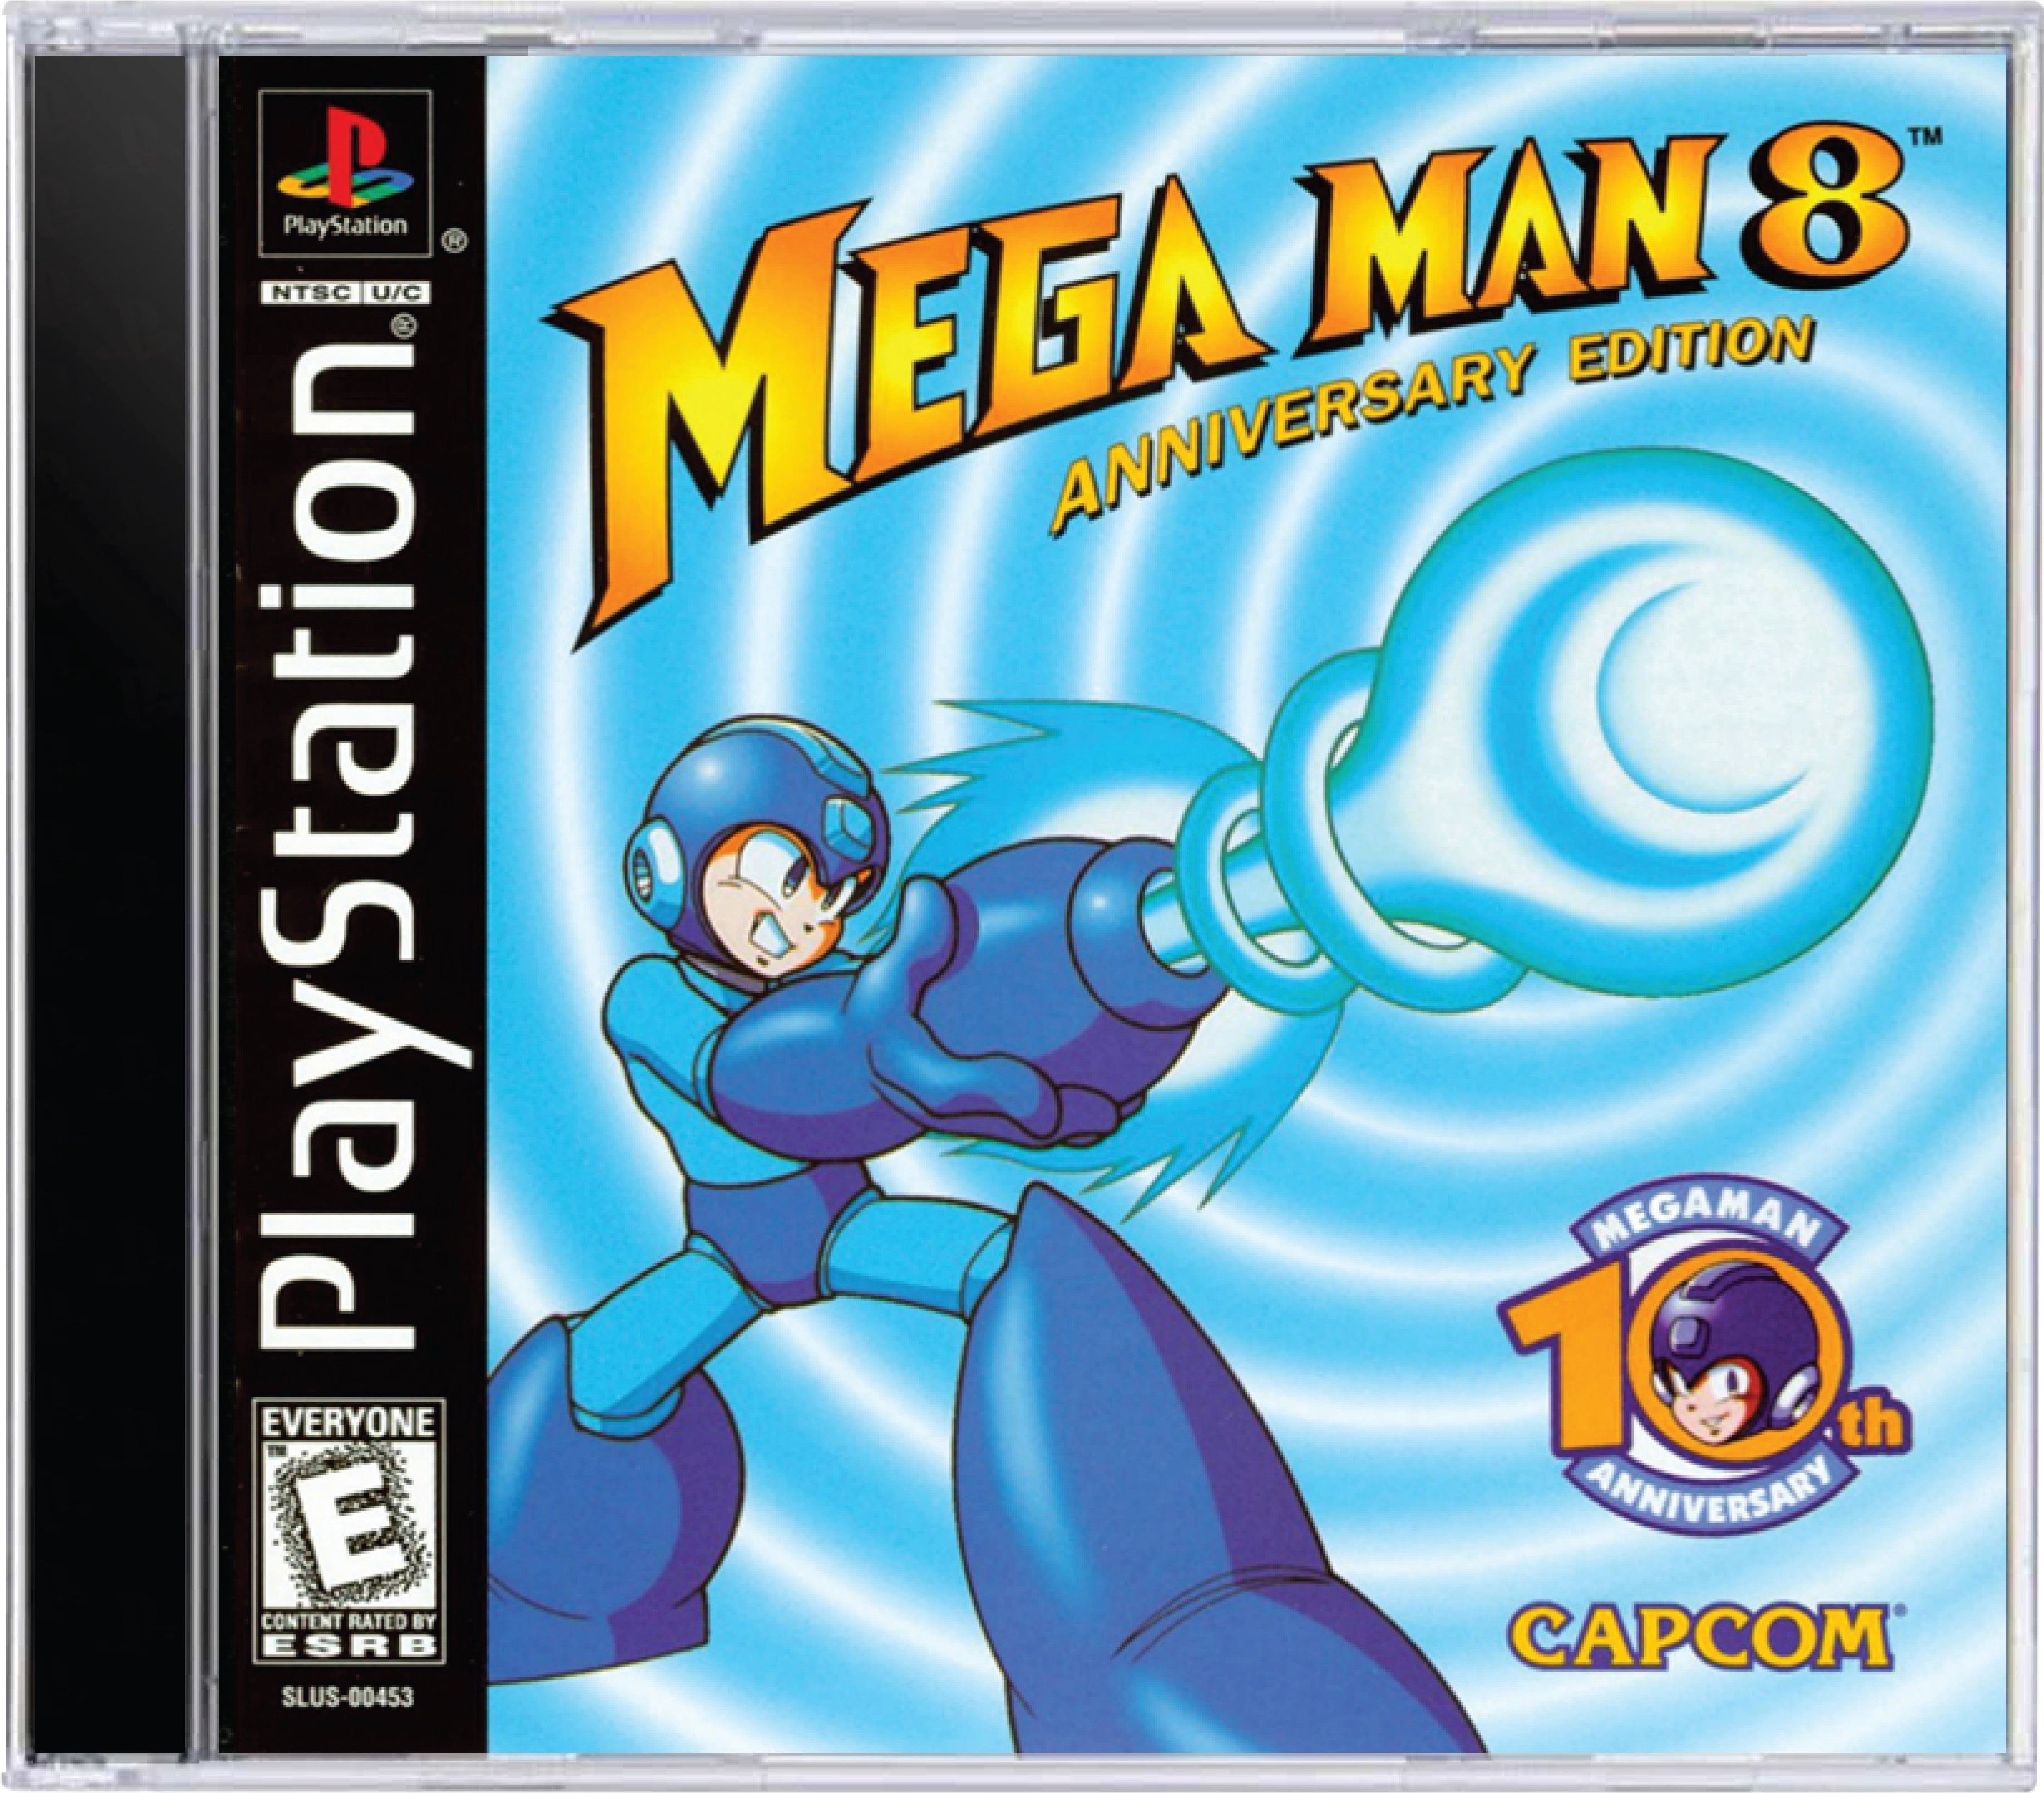 Mega Man 8 Cover Art and Product Photo